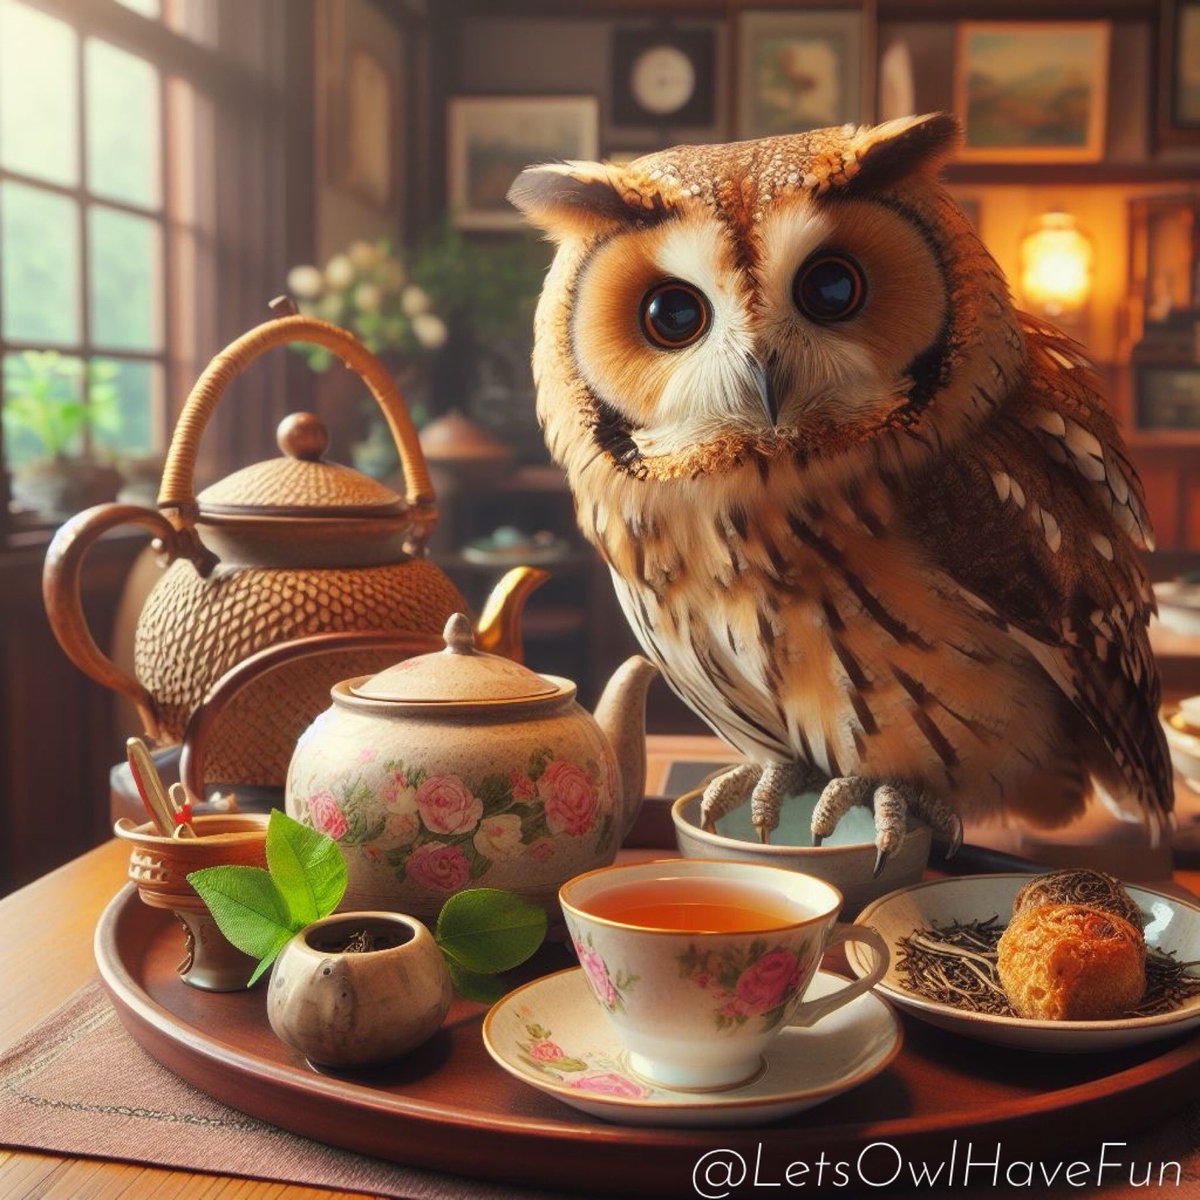 April 21 is National Tea Day!
Steep and drink up!
…
#nationalteaday #tea #earlgreycream #LifeSoDaily #LetsOwlHaveFun #AIart #owl #owls #birds #birdsofprey #greathornedowl #allsmiles #funandgames #fun #lifesodaily #emotionalhealth